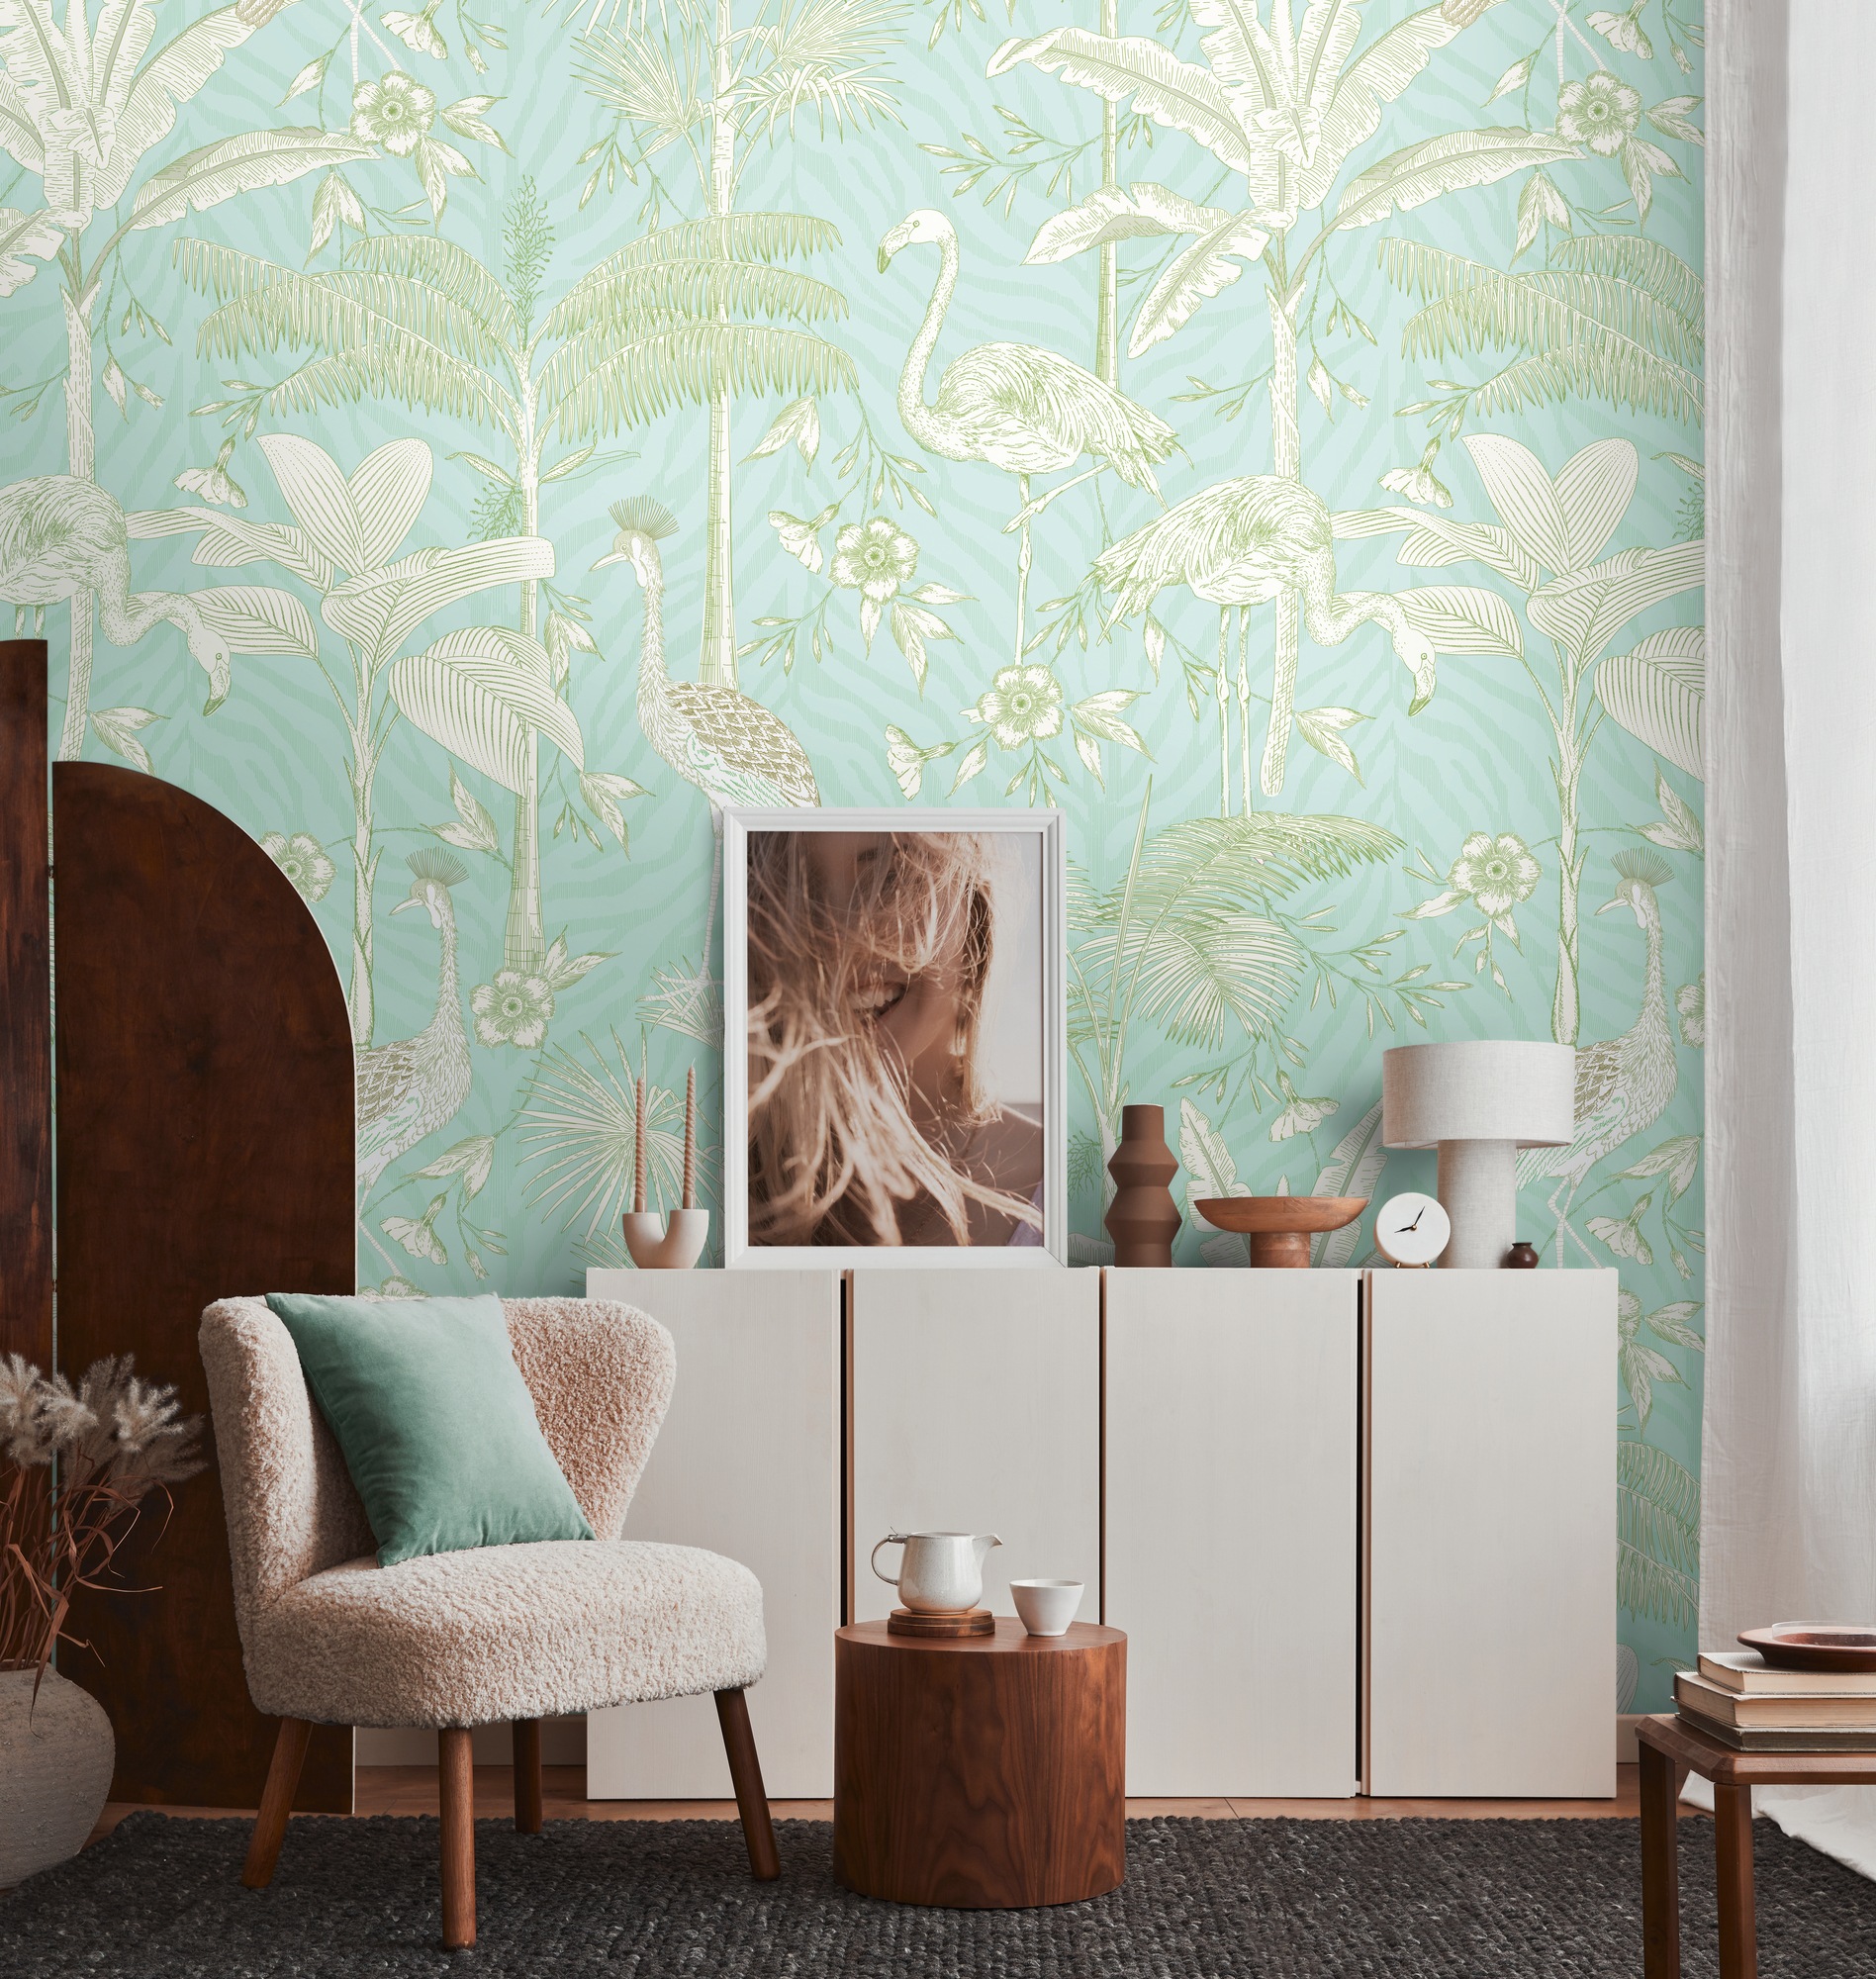 living walls Fototapete »Palmen Tapete«, matt, Tiertapete Fototapete Floral günstig online kaufen